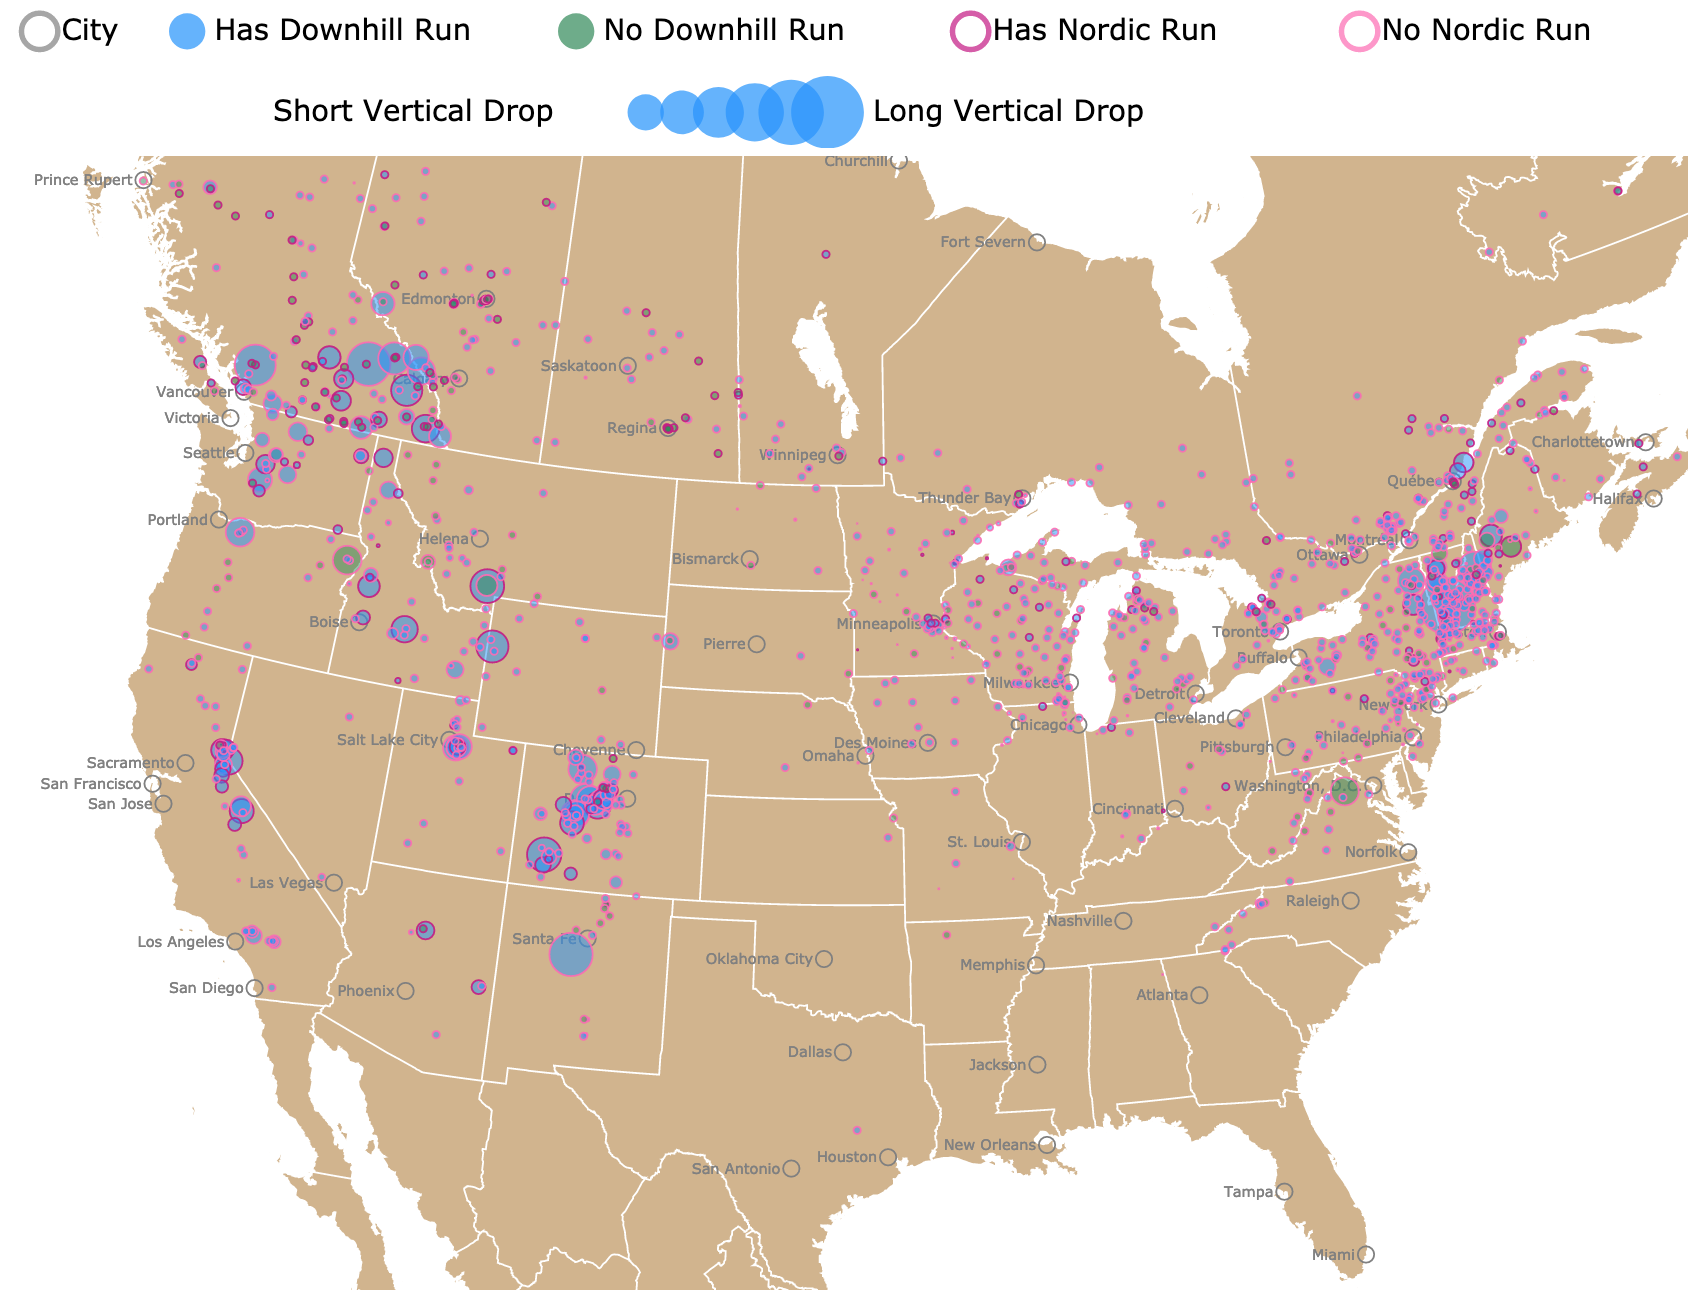 Interactive Map of ski resorts in North America